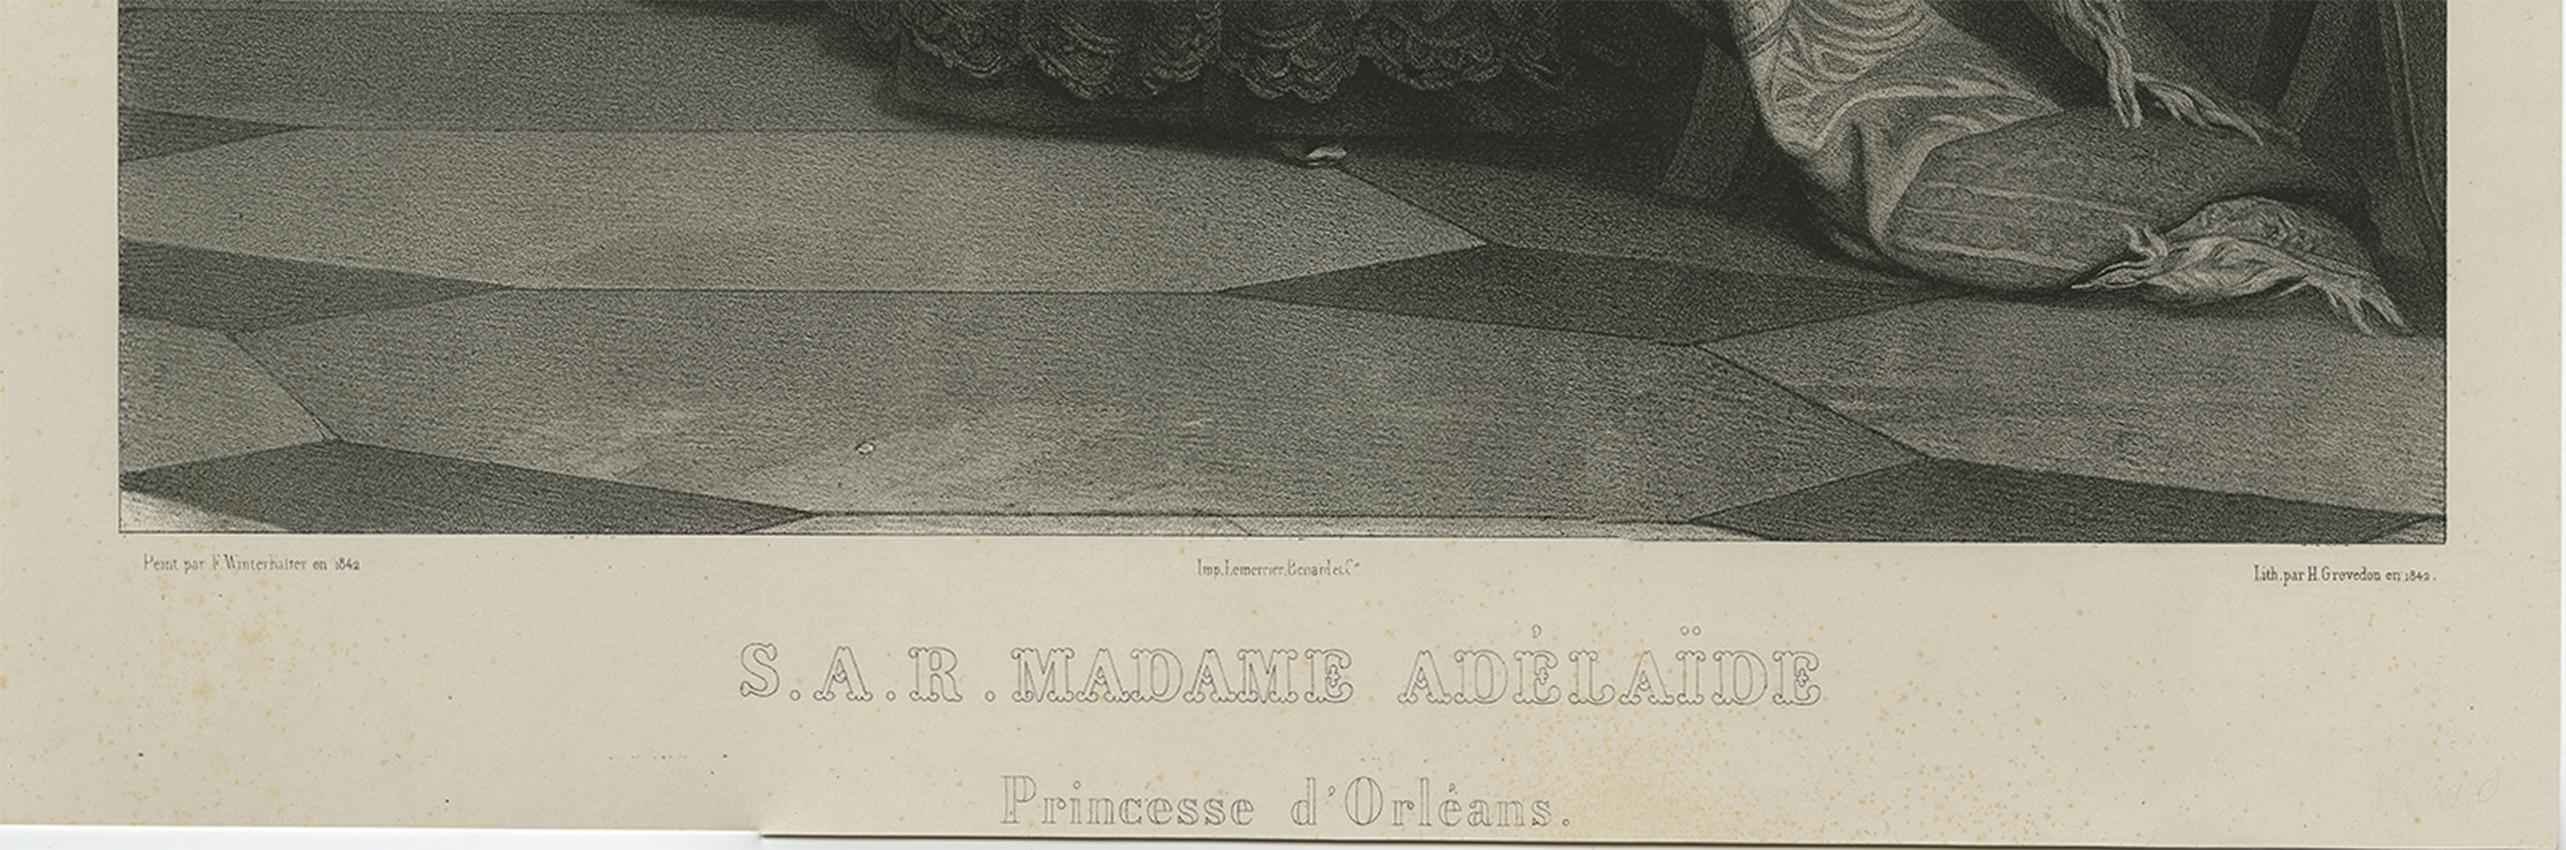 19th Century Large Antique Portrait of Princess Adelaide d'Orléans by H. Grevedon, 1842 For Sale